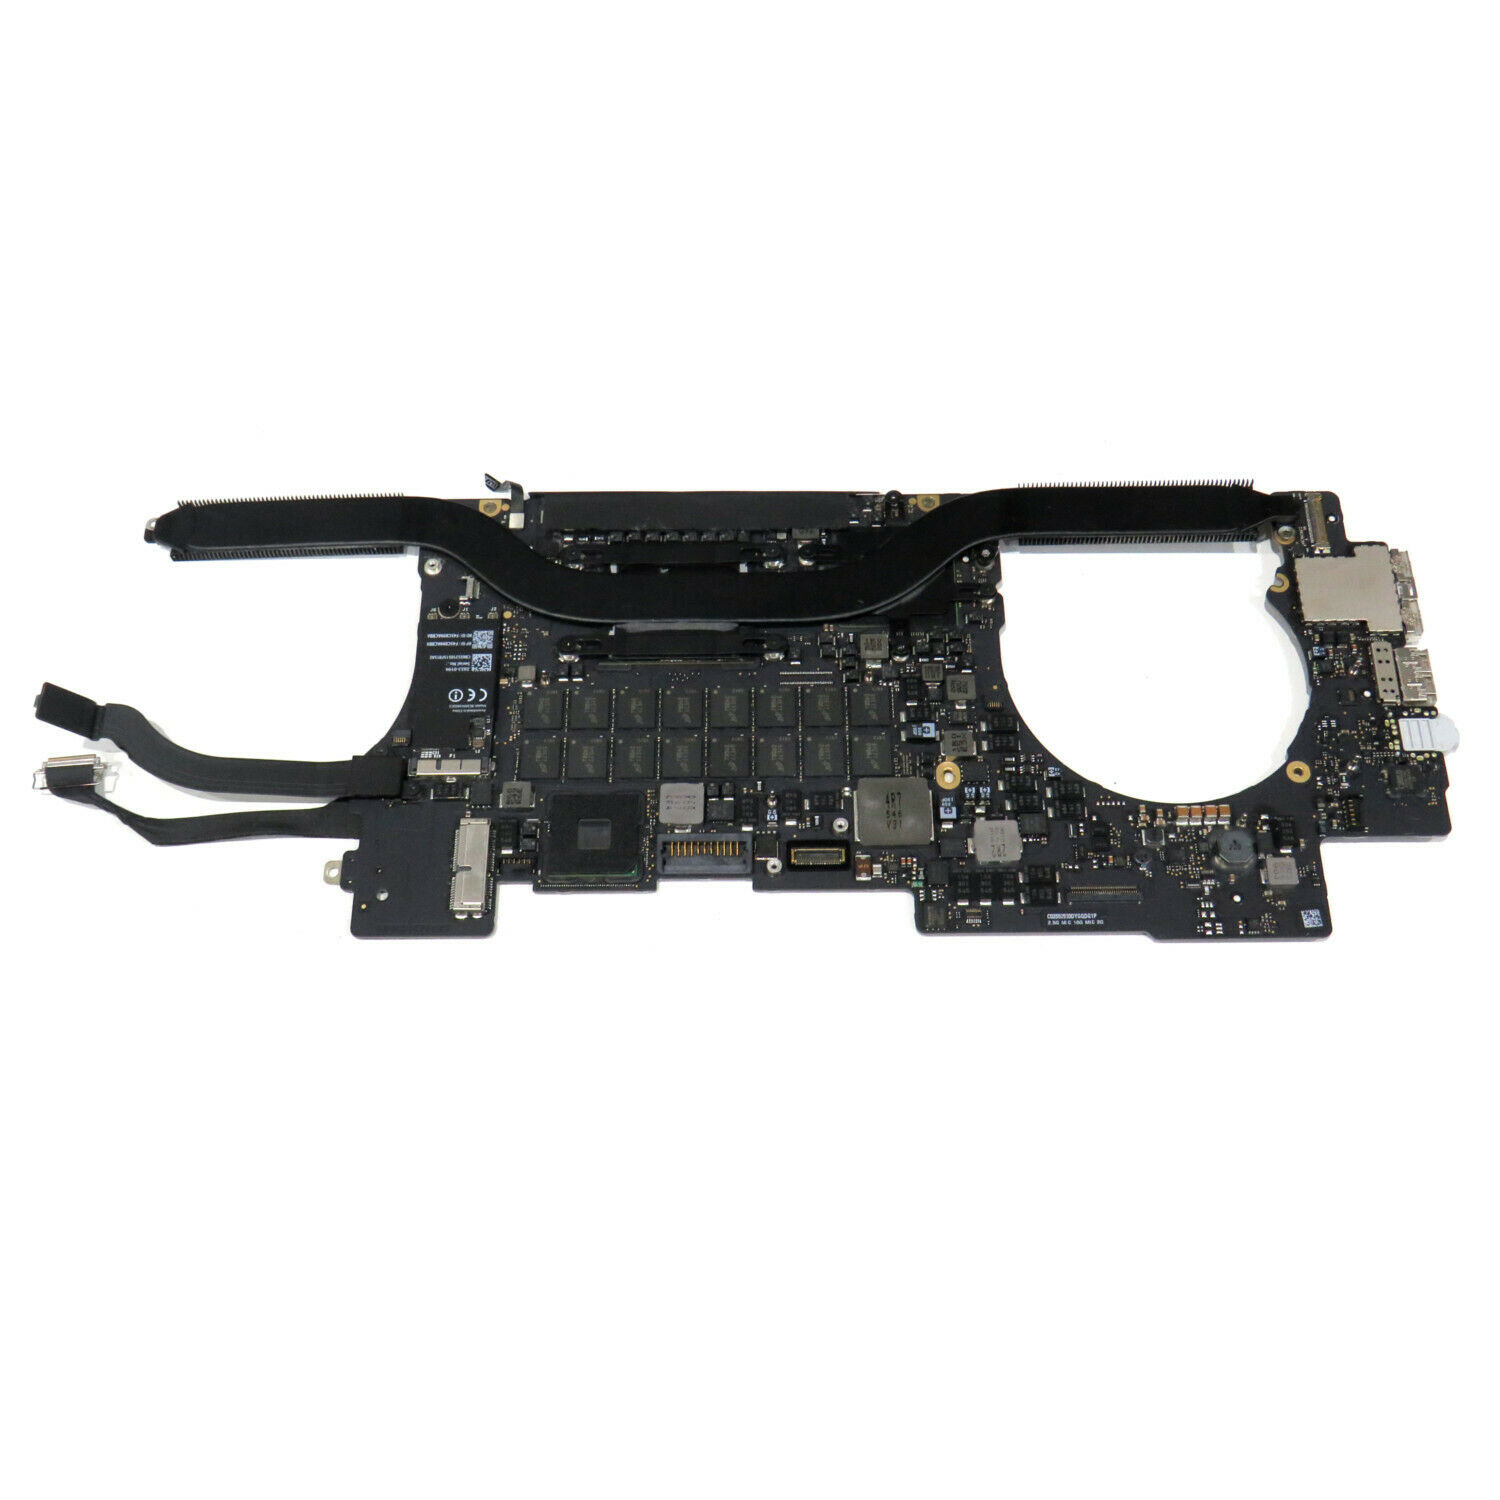 Logic board moederbord 820-3332-A 16GB voor i7 2.3Ghz MacBook Pro retina 15-inch A1398 model 2012 - early 2013